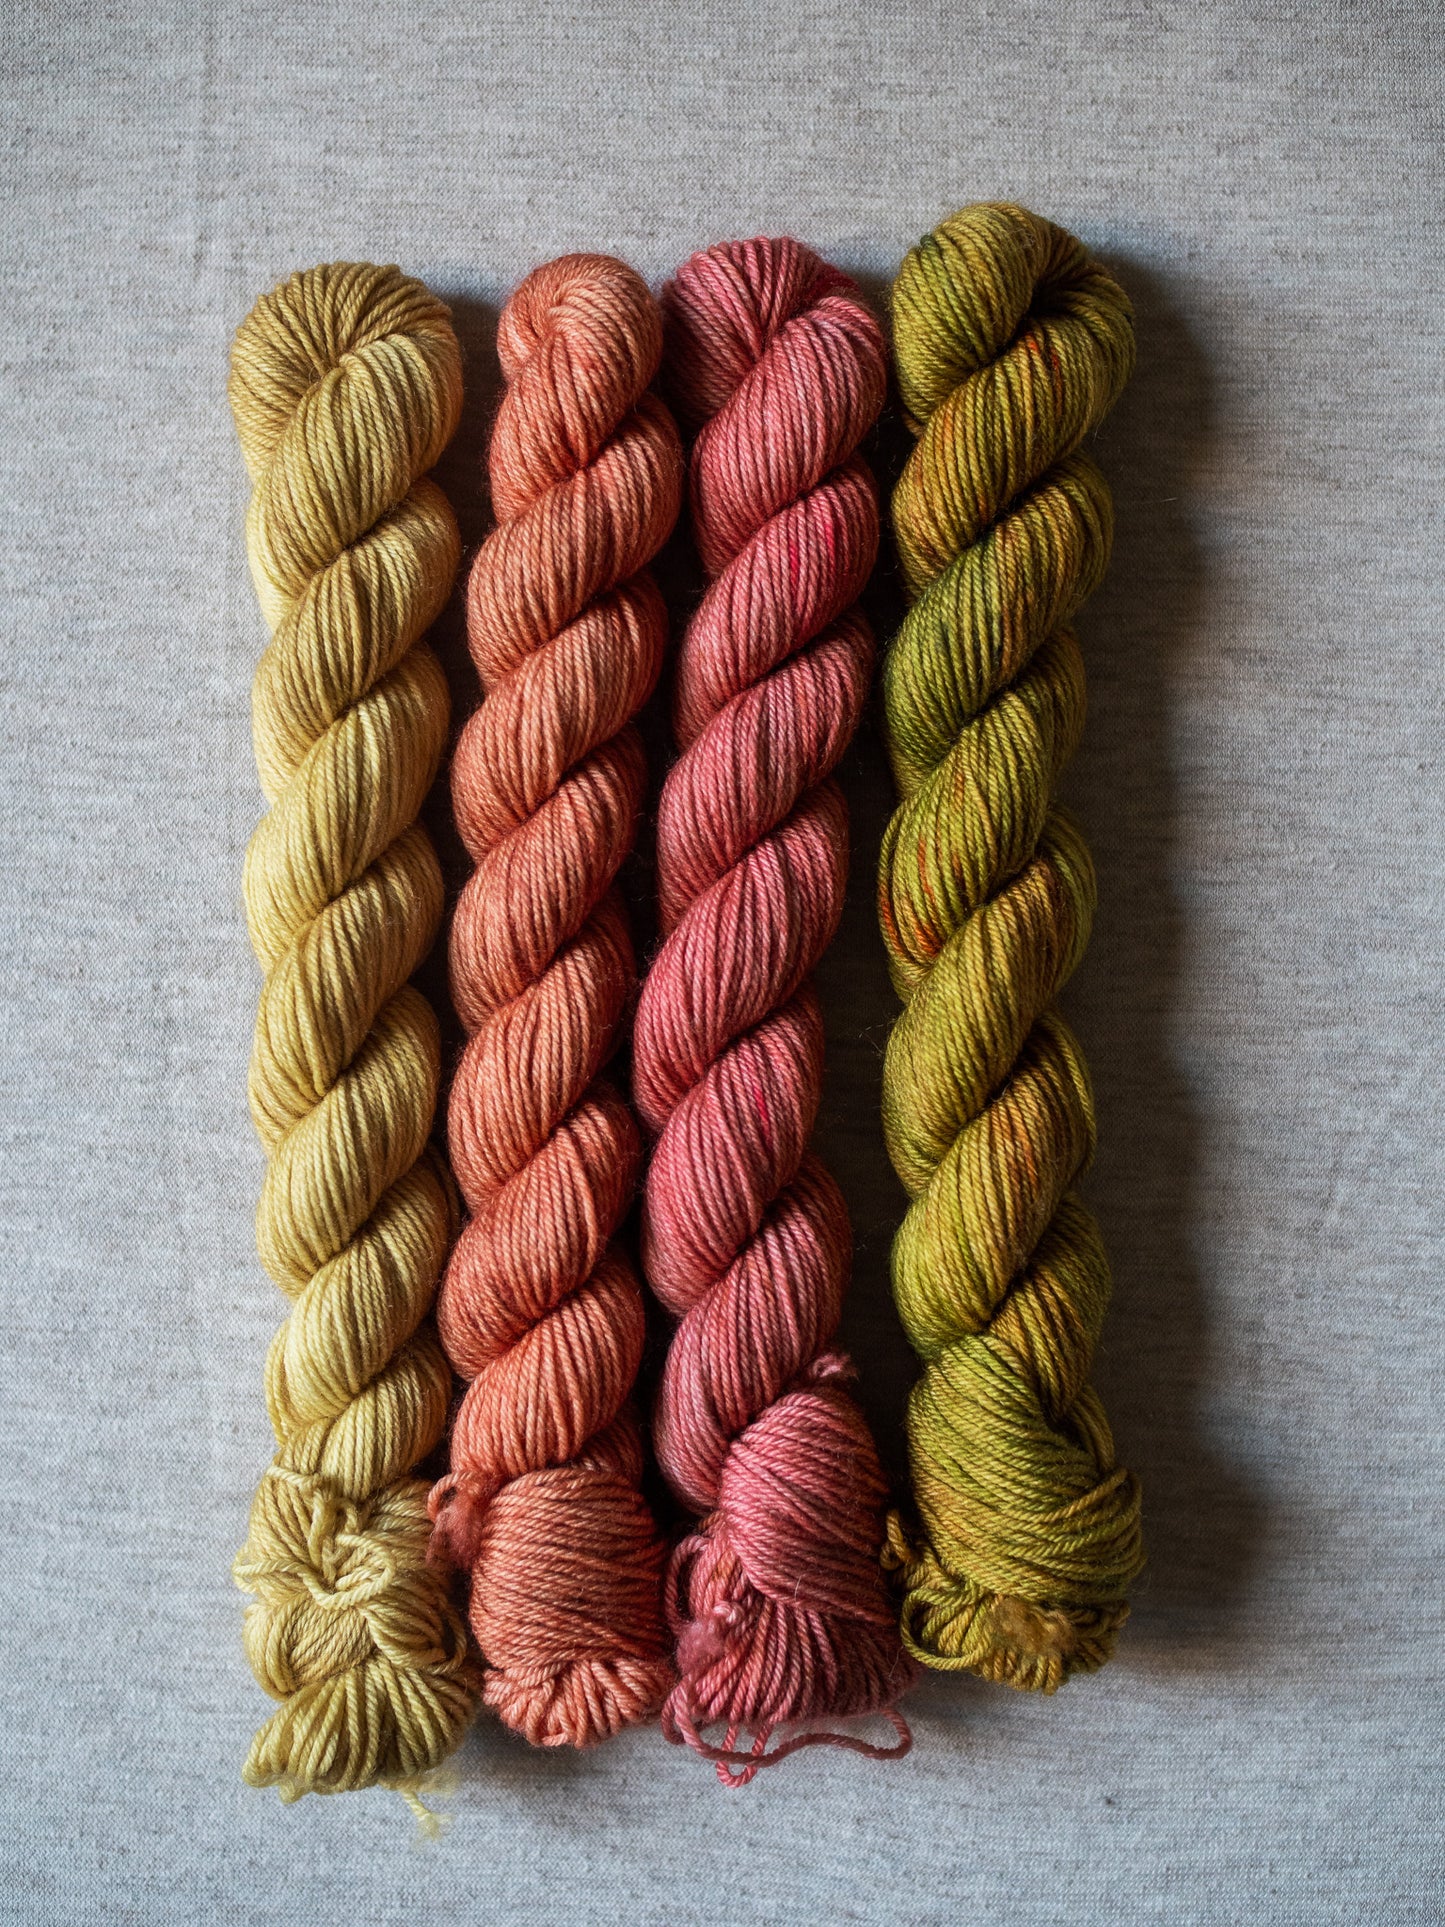 NEW IN! Westknits Geogradient MKAL yarn kit - 4 shade gradient set - Multicolor